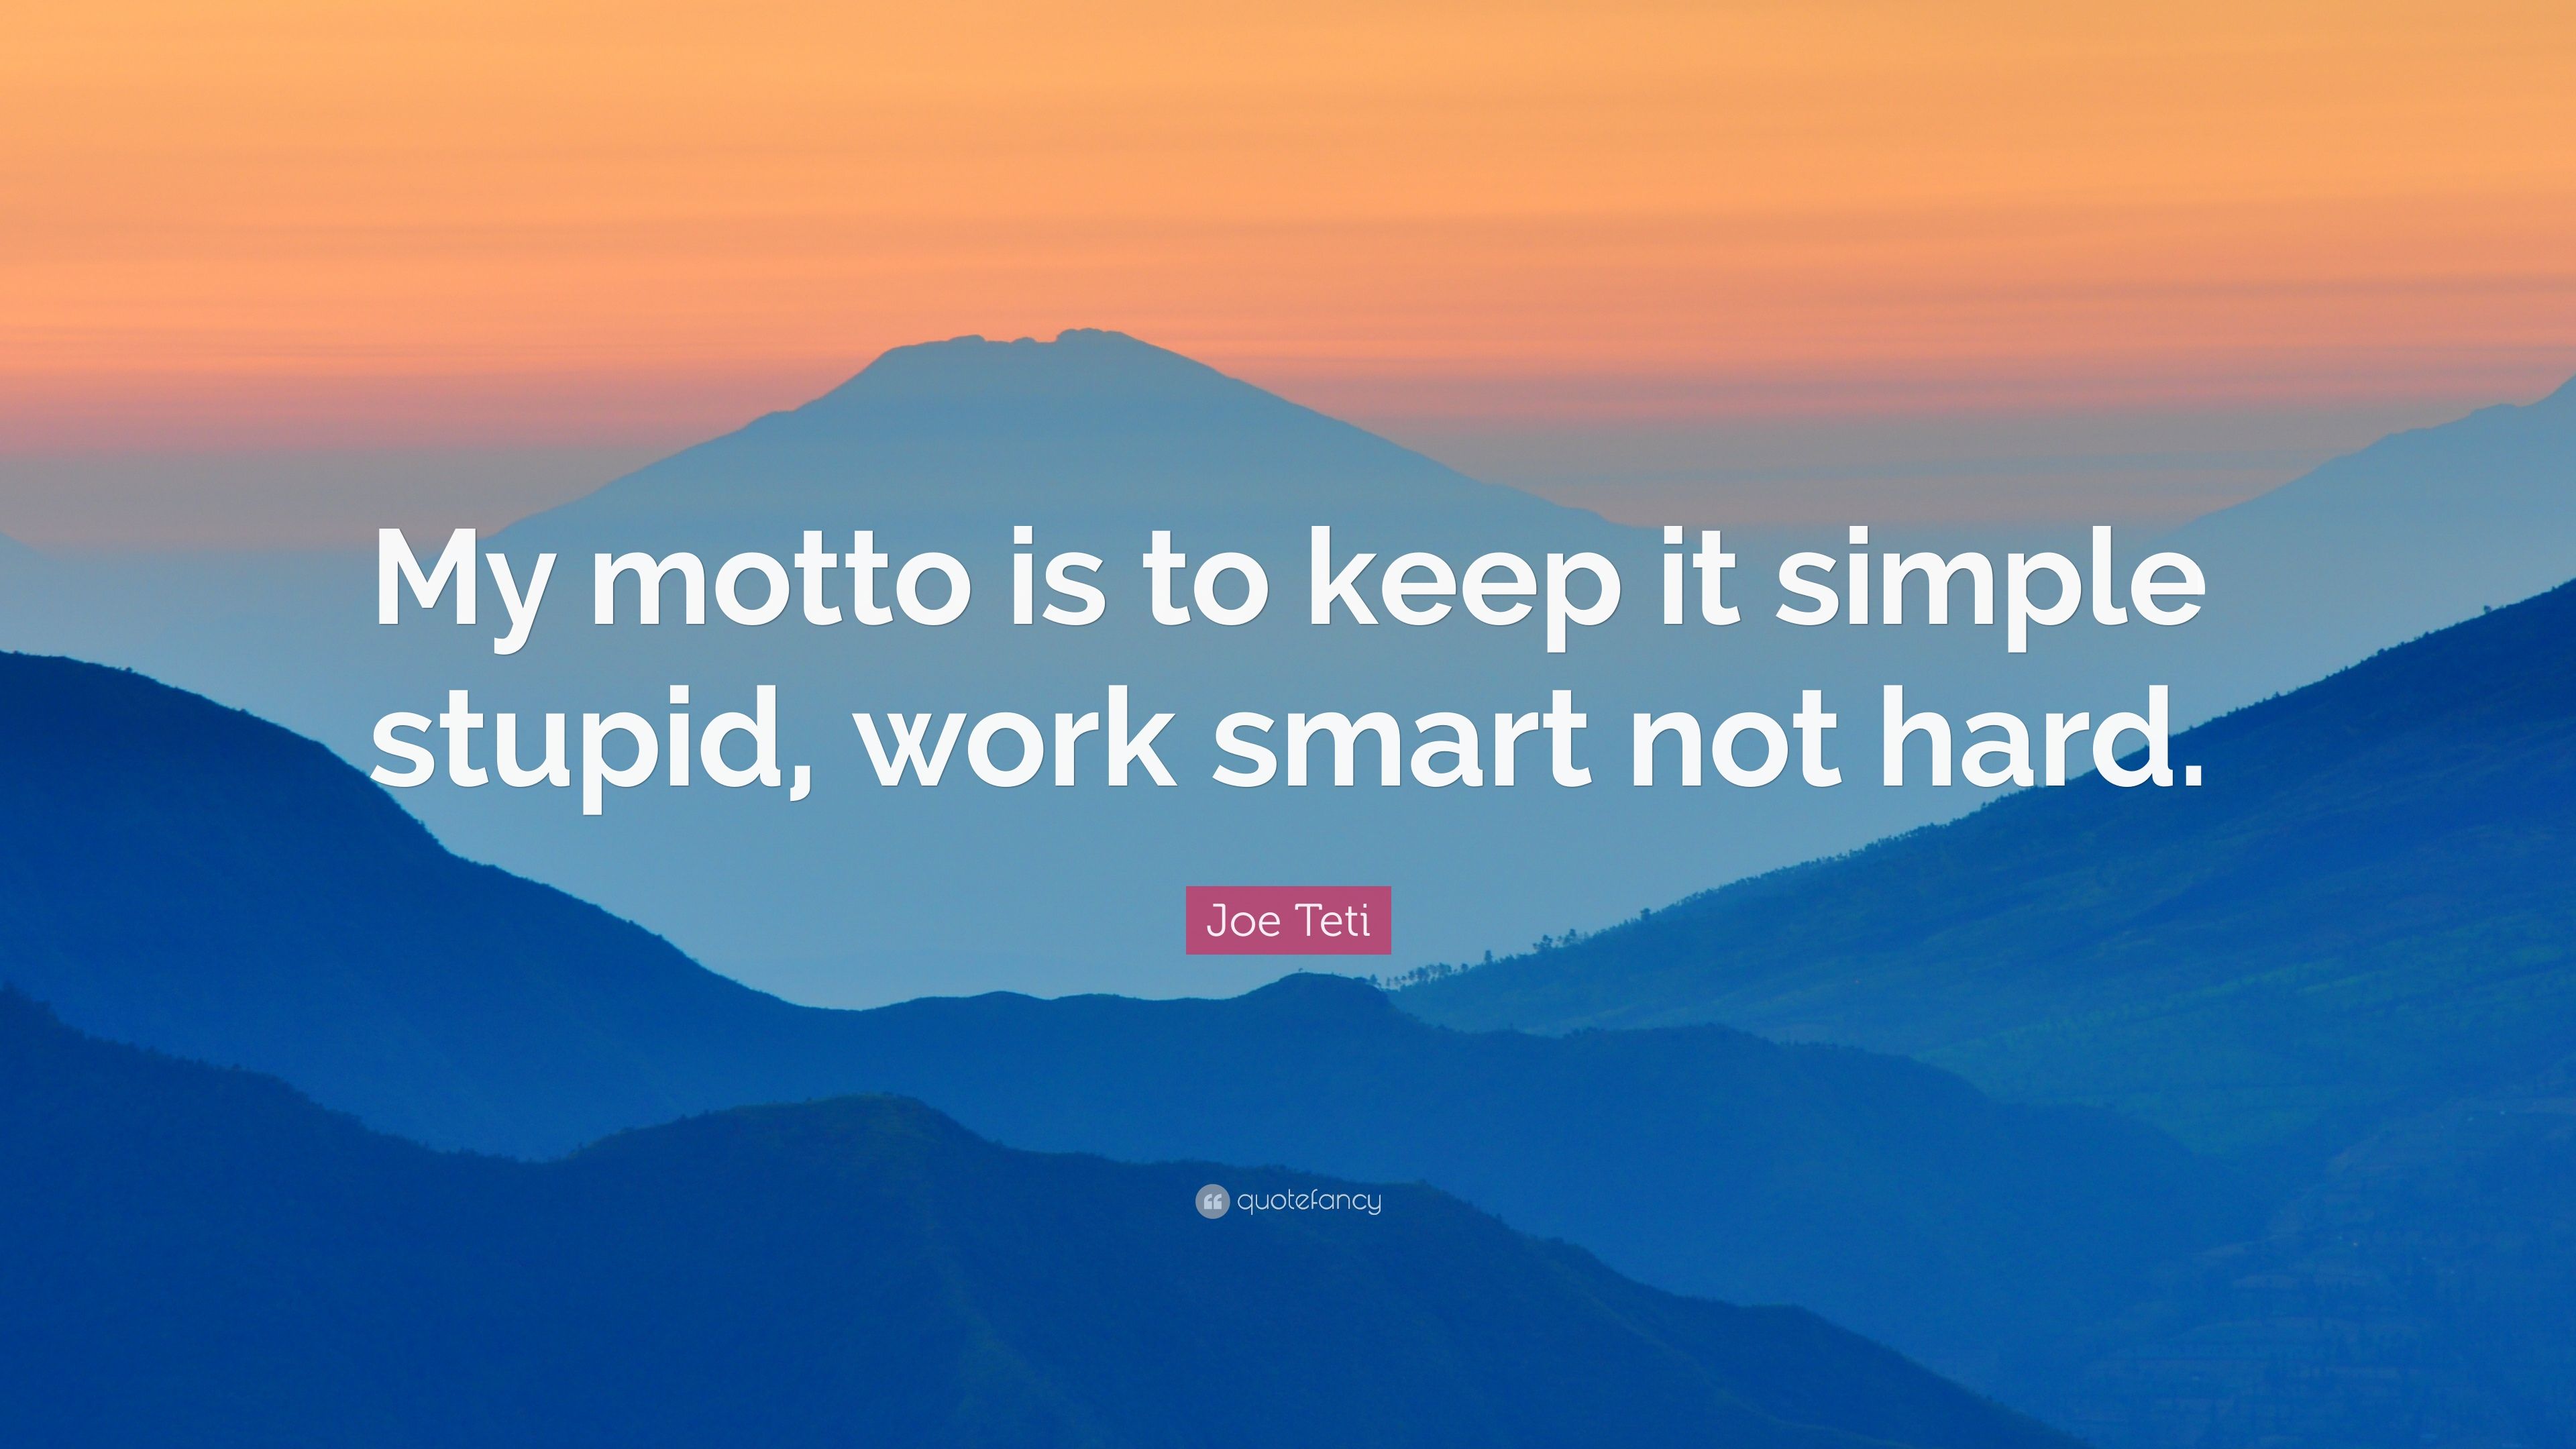 Joe Teti Quote: “My motto is to keep it simple stupid, work smart